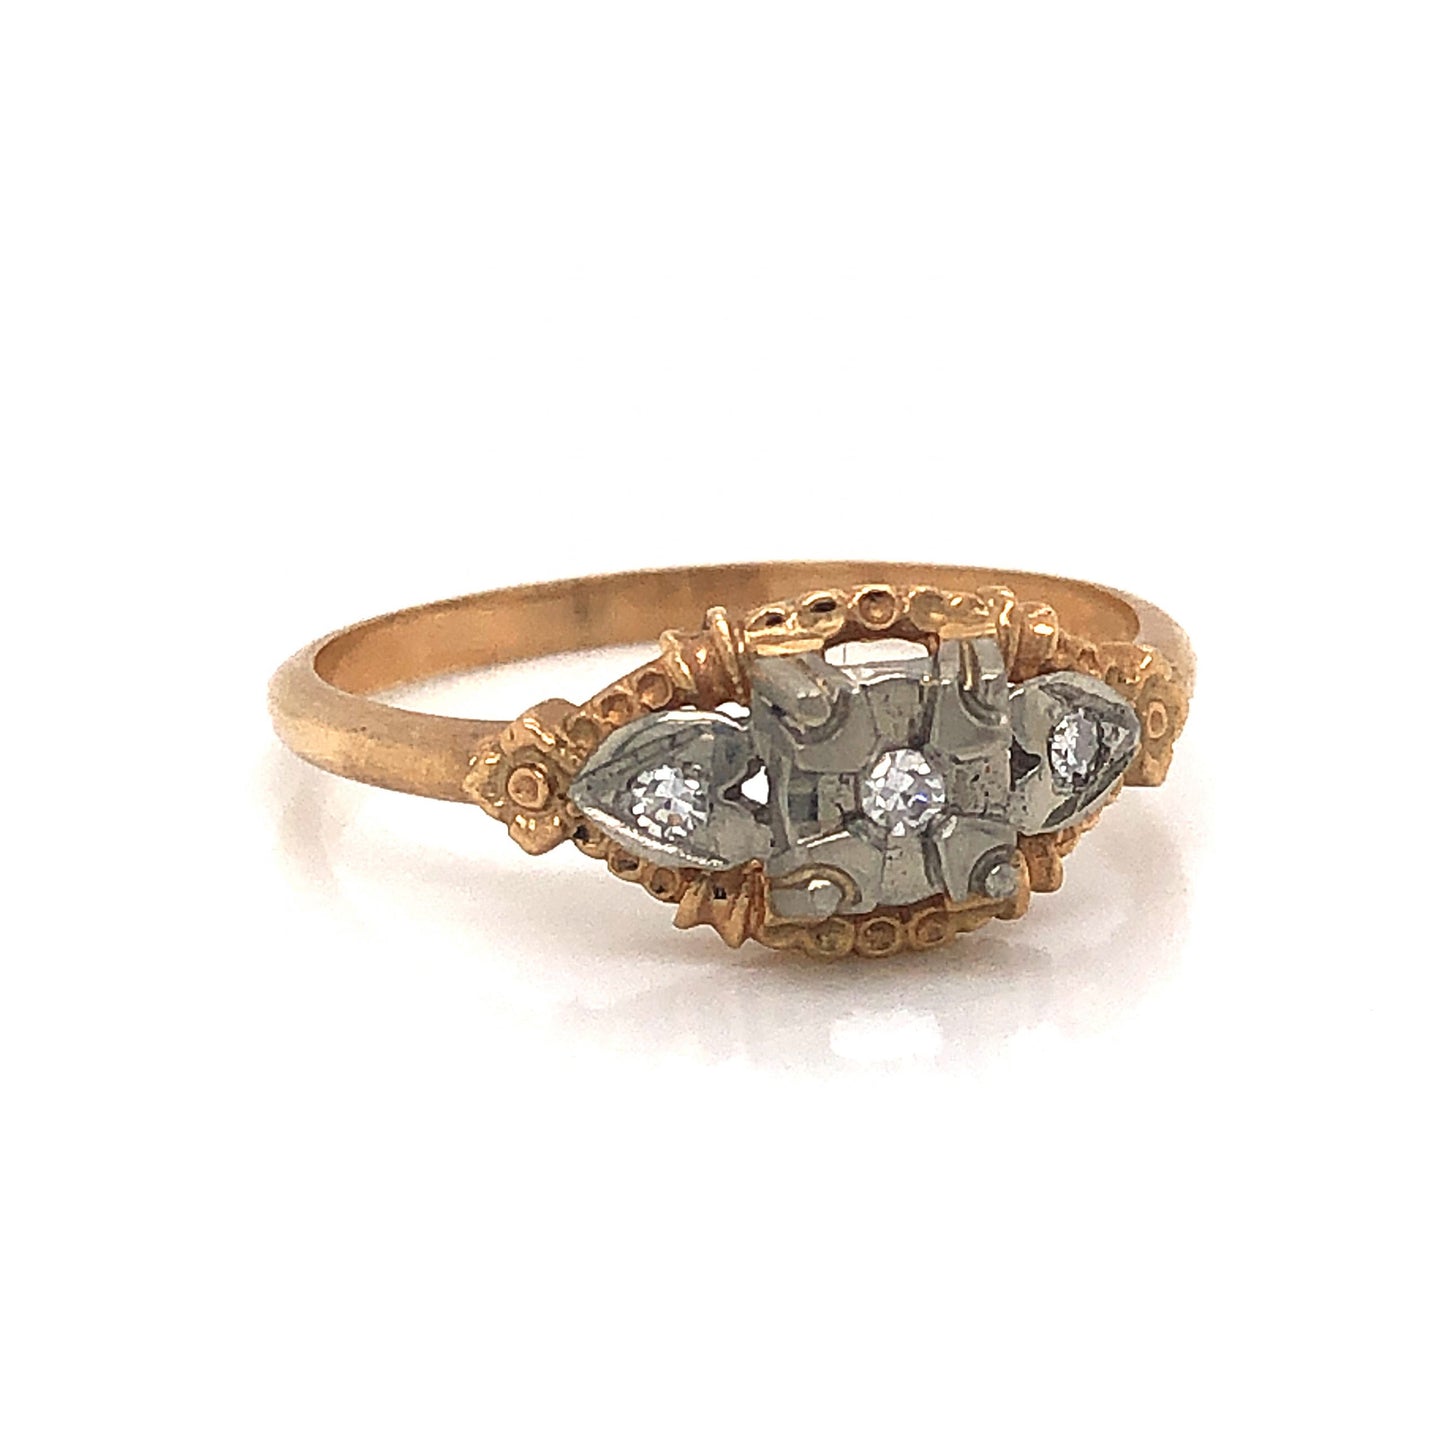 Dainty Retro Diamond Engagement Ring in 14k & 18k Gold